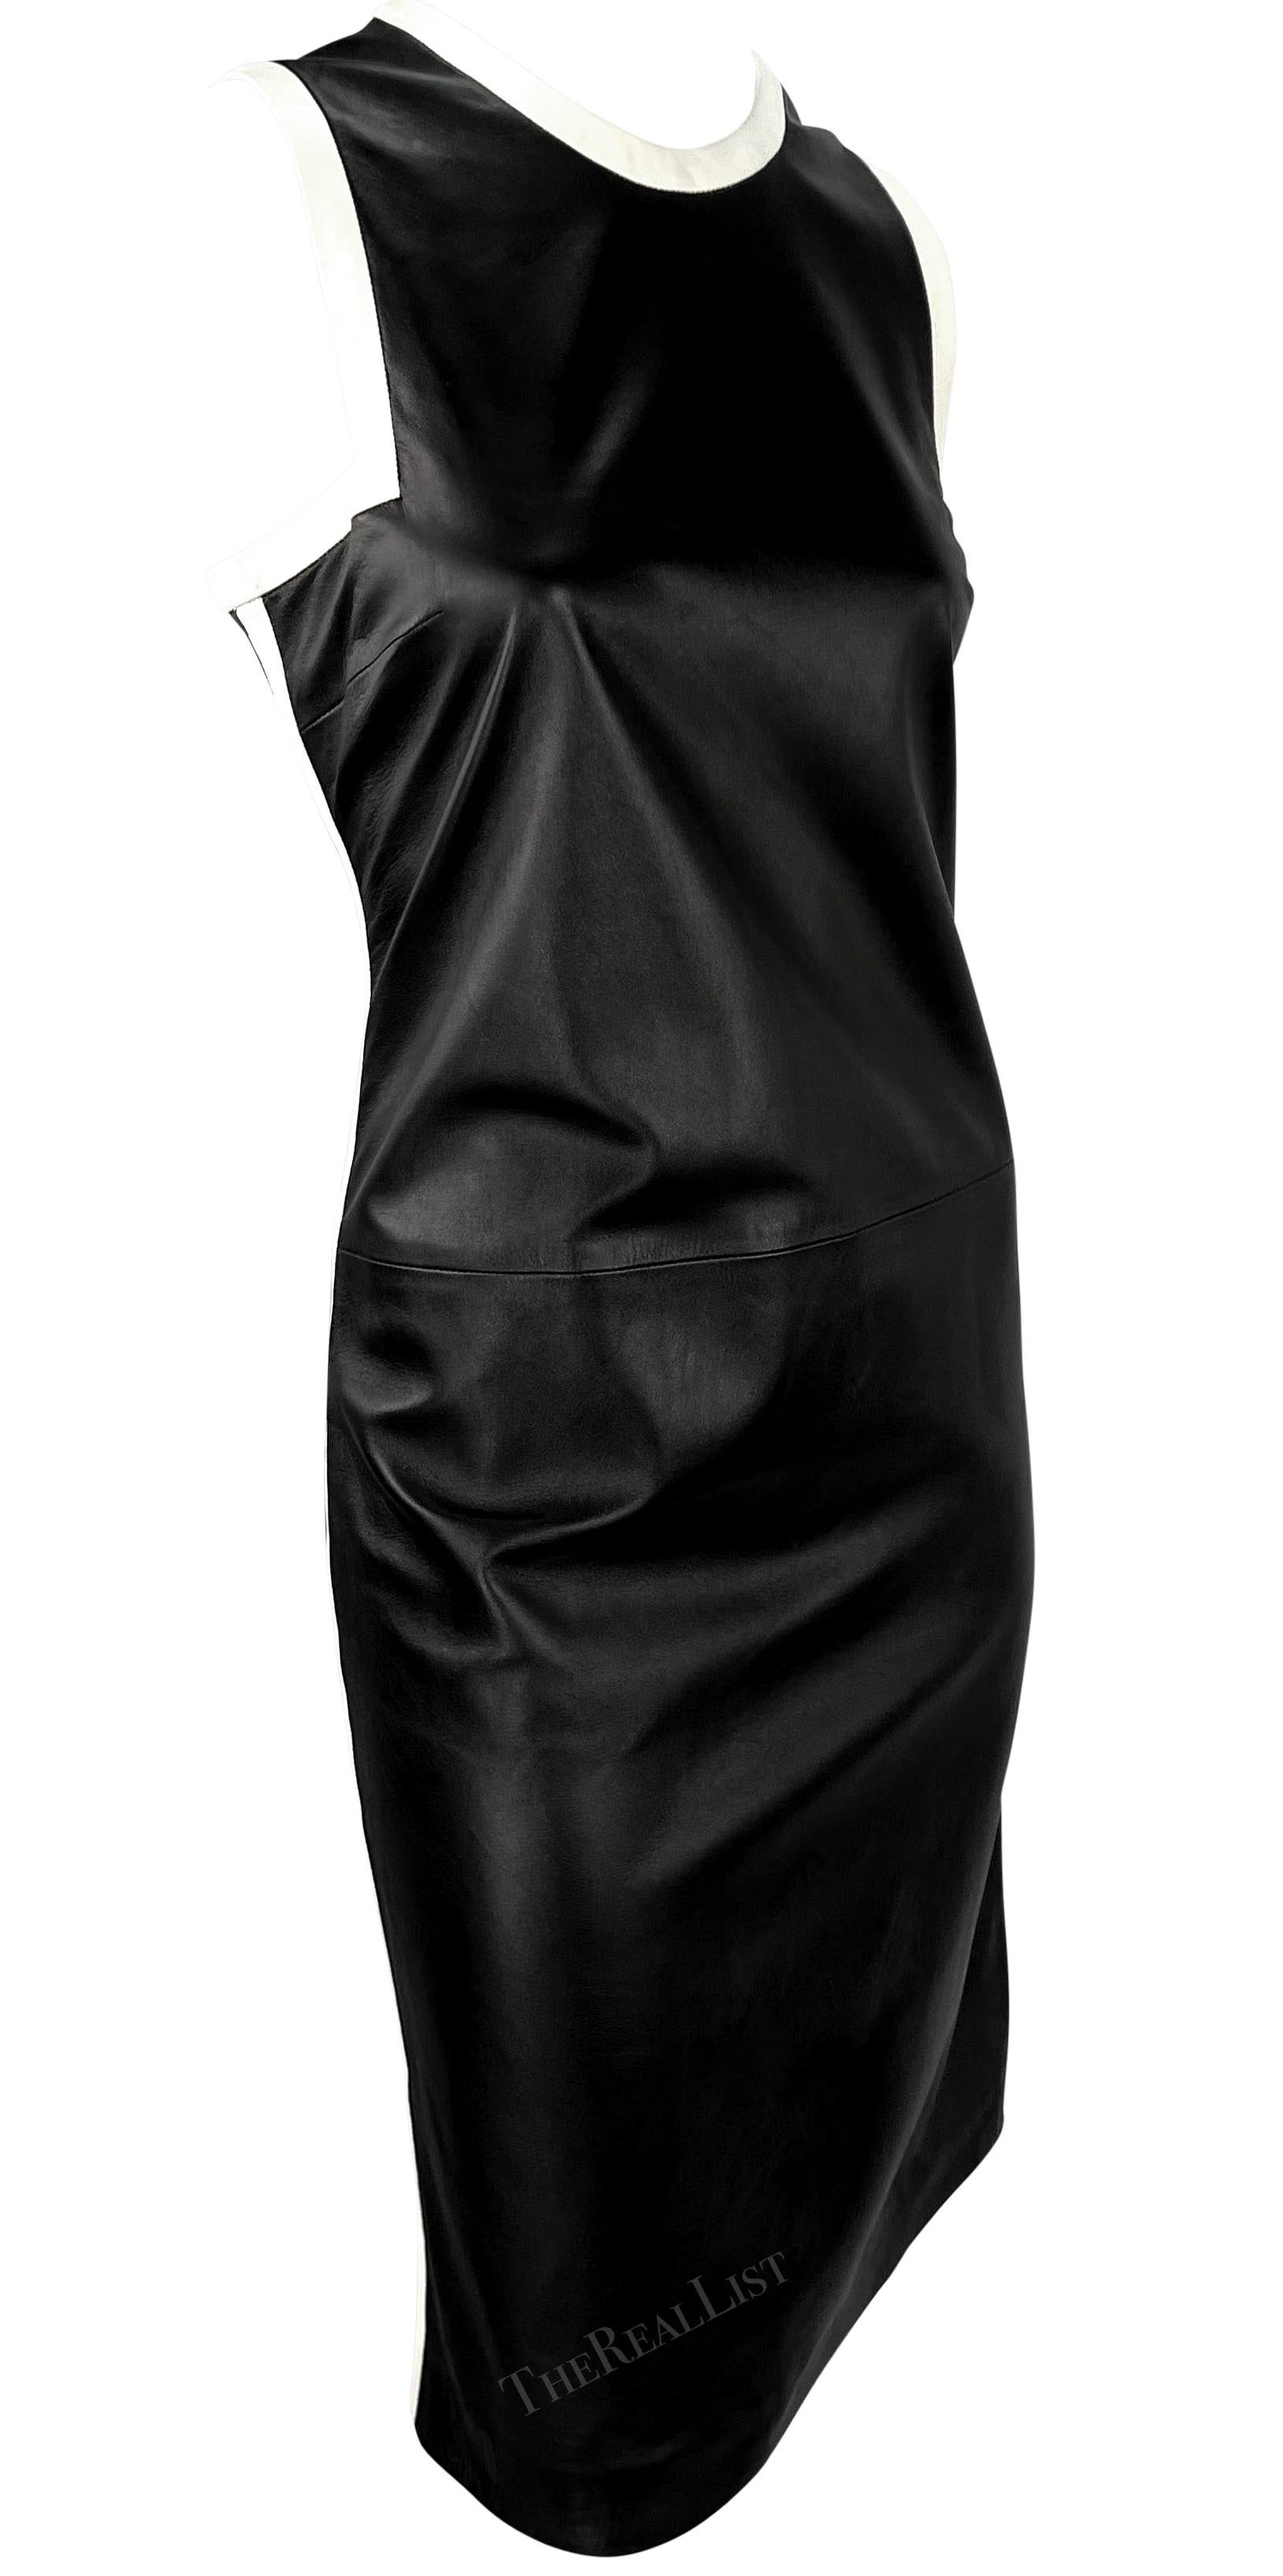 S/S 2001 Ralph Lauren Black Runway Black Leather White Trim Sleeveless Dress For Sale 7